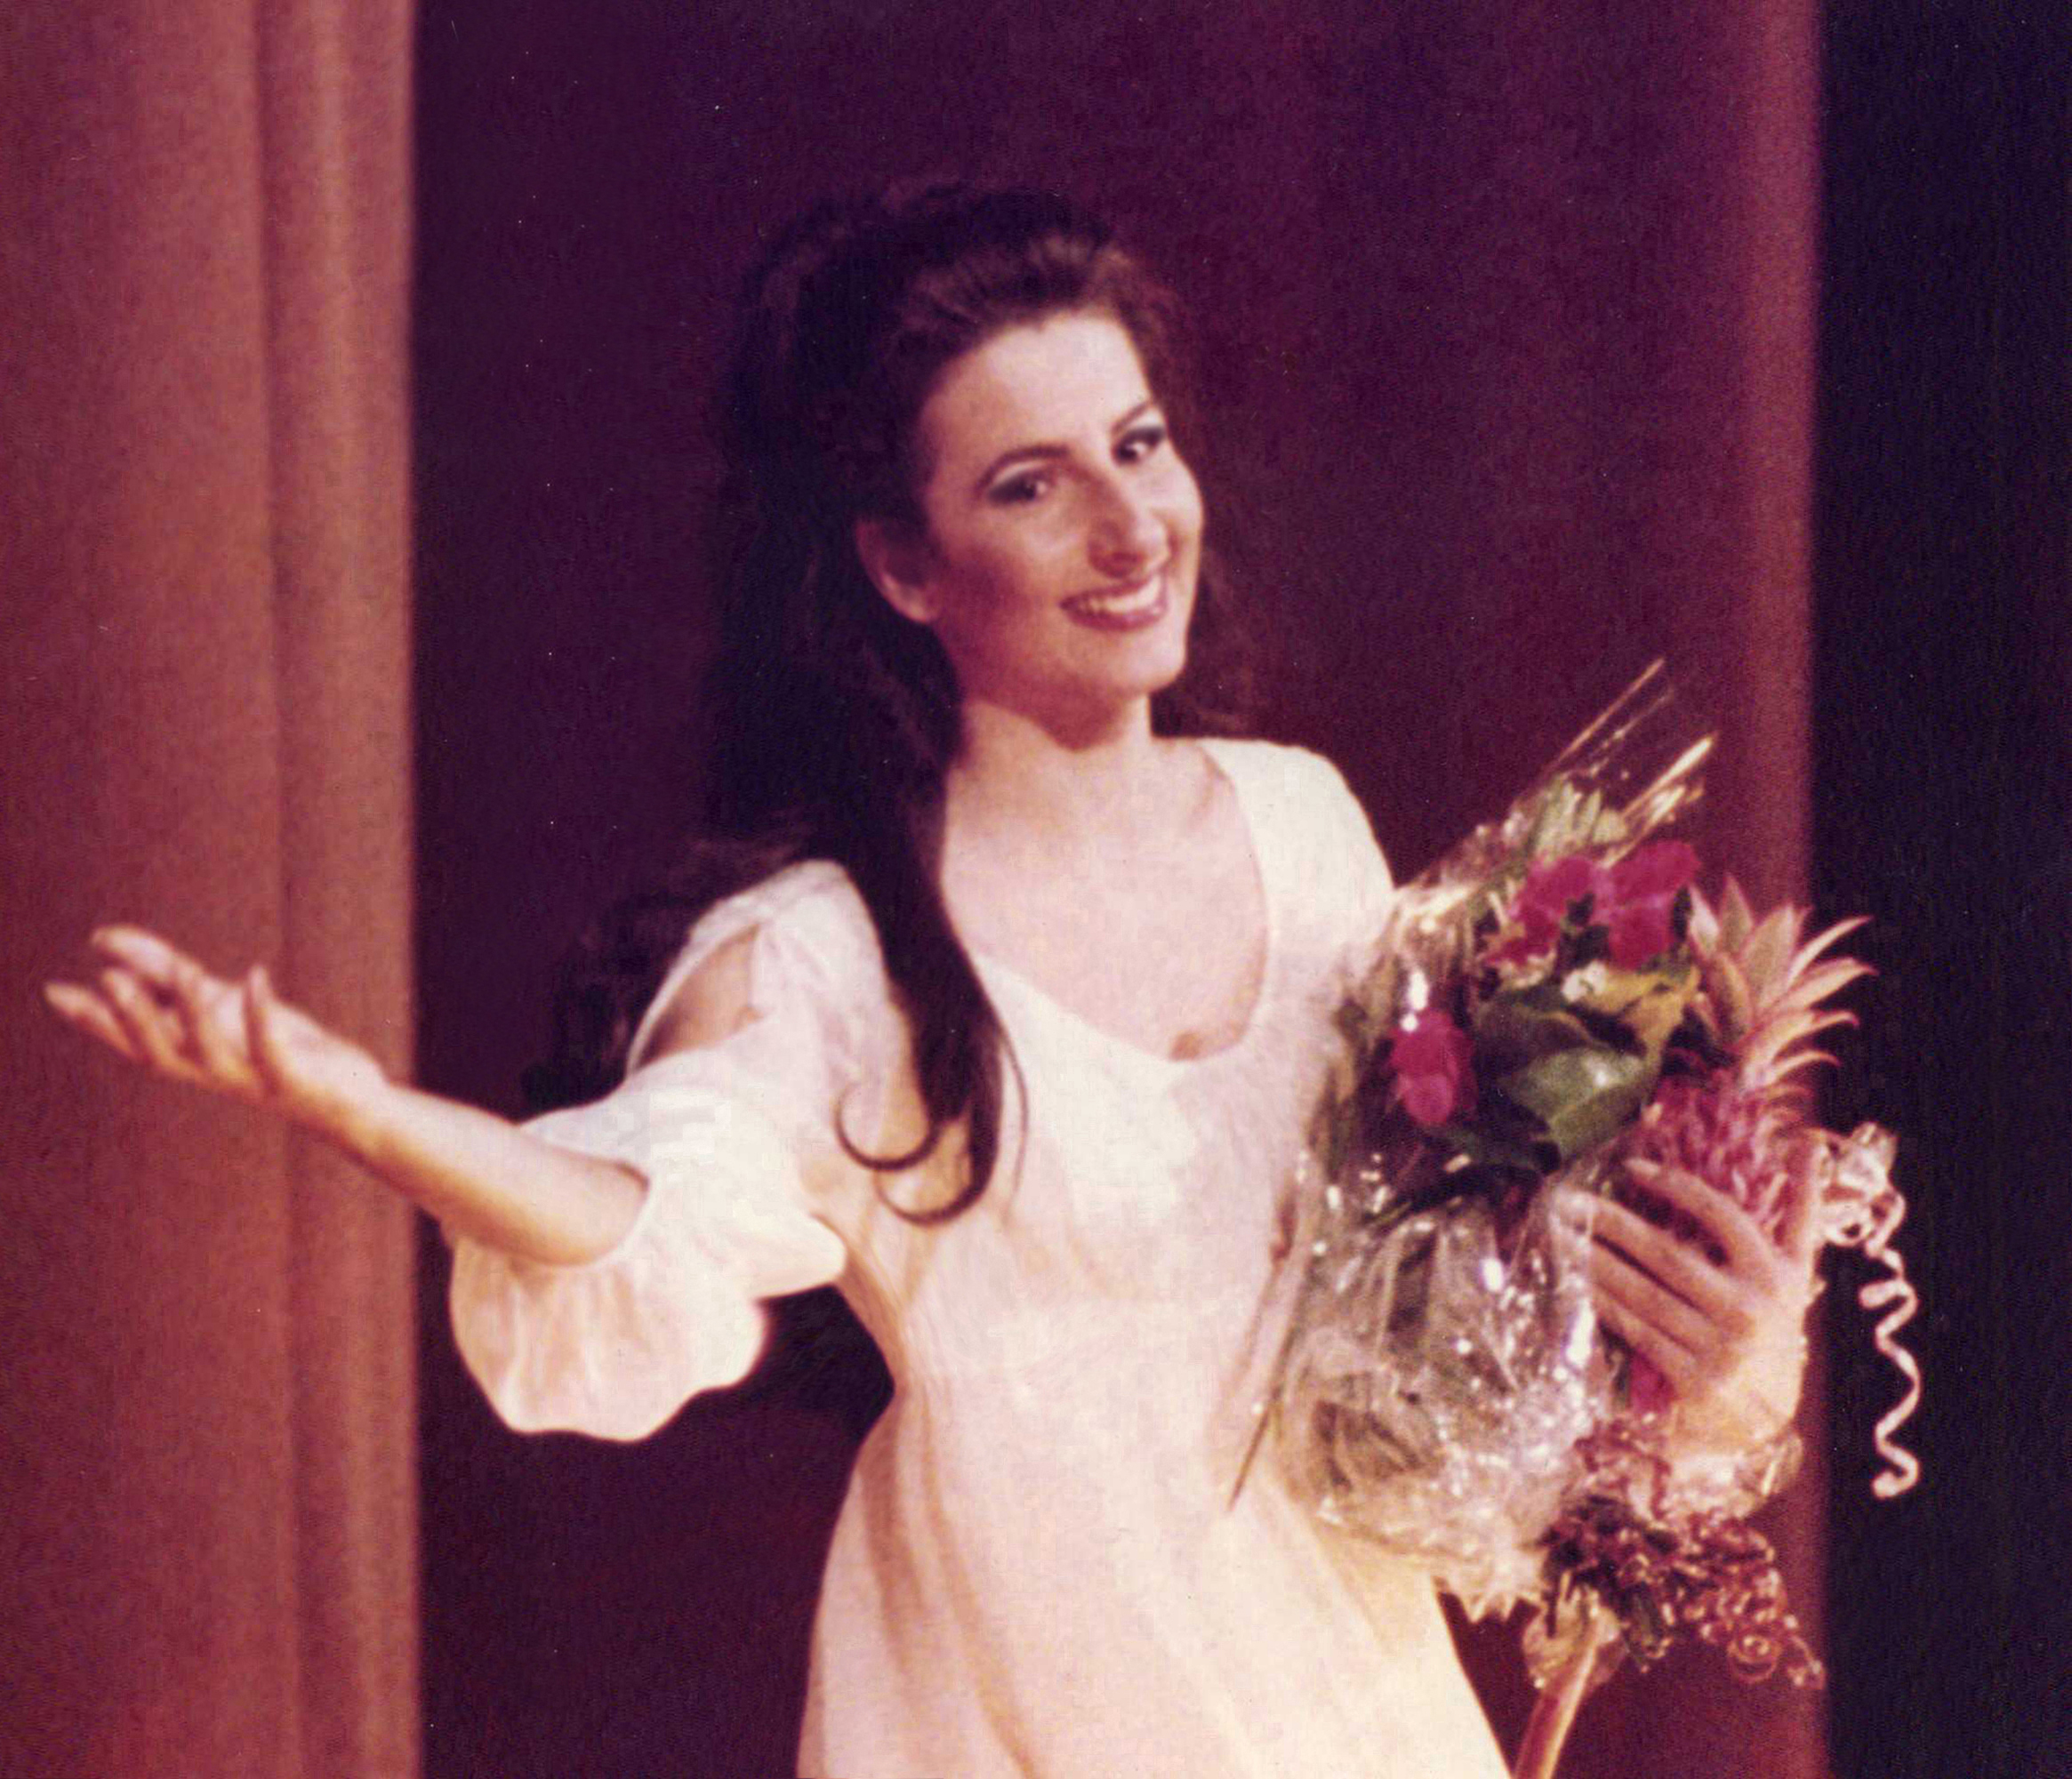 Lucia Aliberti⚘Opera⚘"Lucia di Lammermoor"⚘Deutsche Oper Berlin⚘Berlin⚘On Stage⚘:http://www.luciaaliberti.it #luciaaliberti #deutscheoperberlin #berlin #luciadilammermoor #opera #onstage